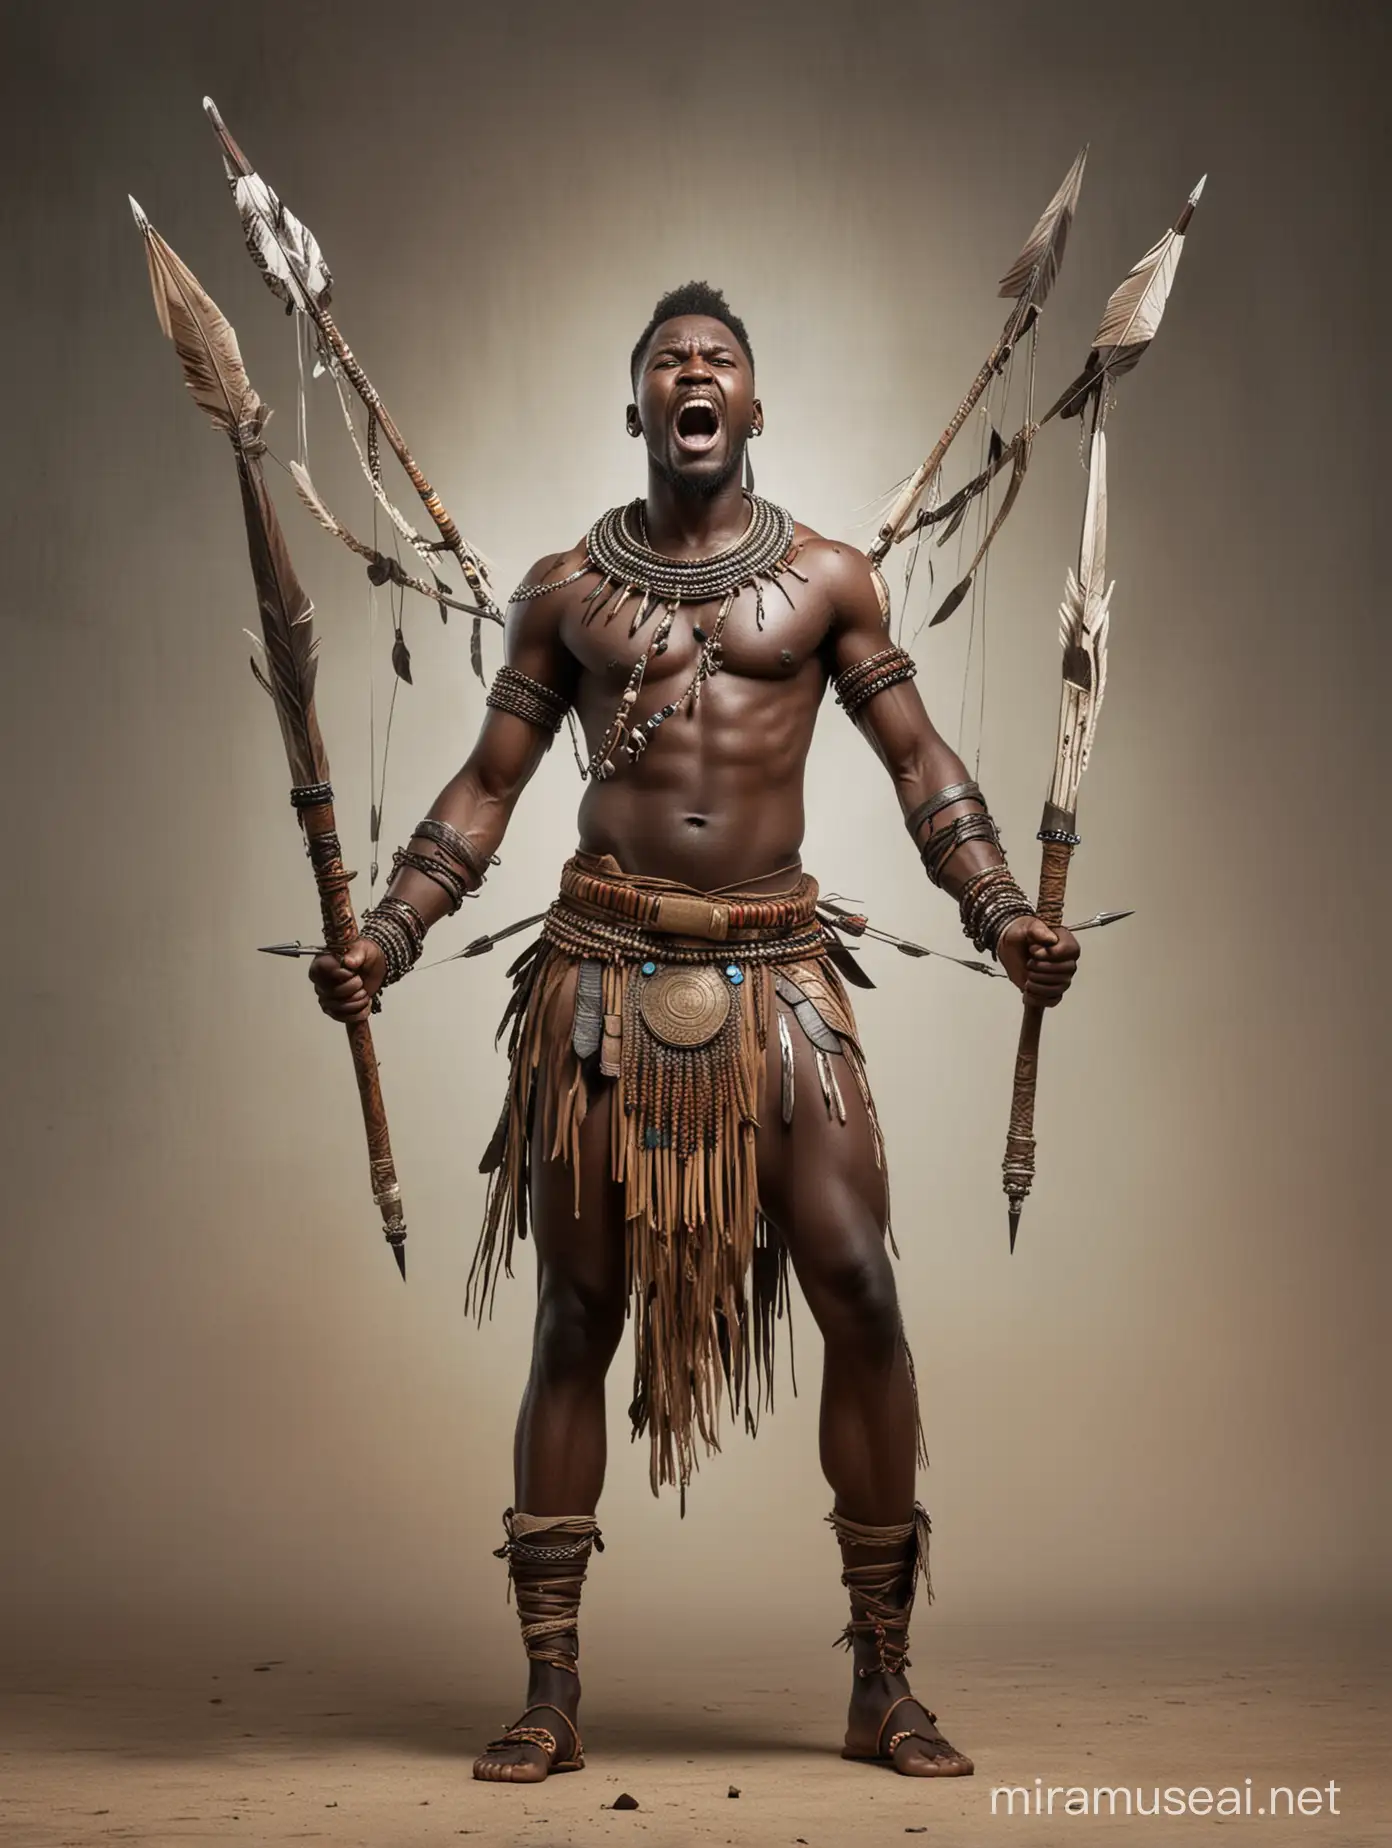 African Warrior Screaming Amidst Arrows Piercing Body